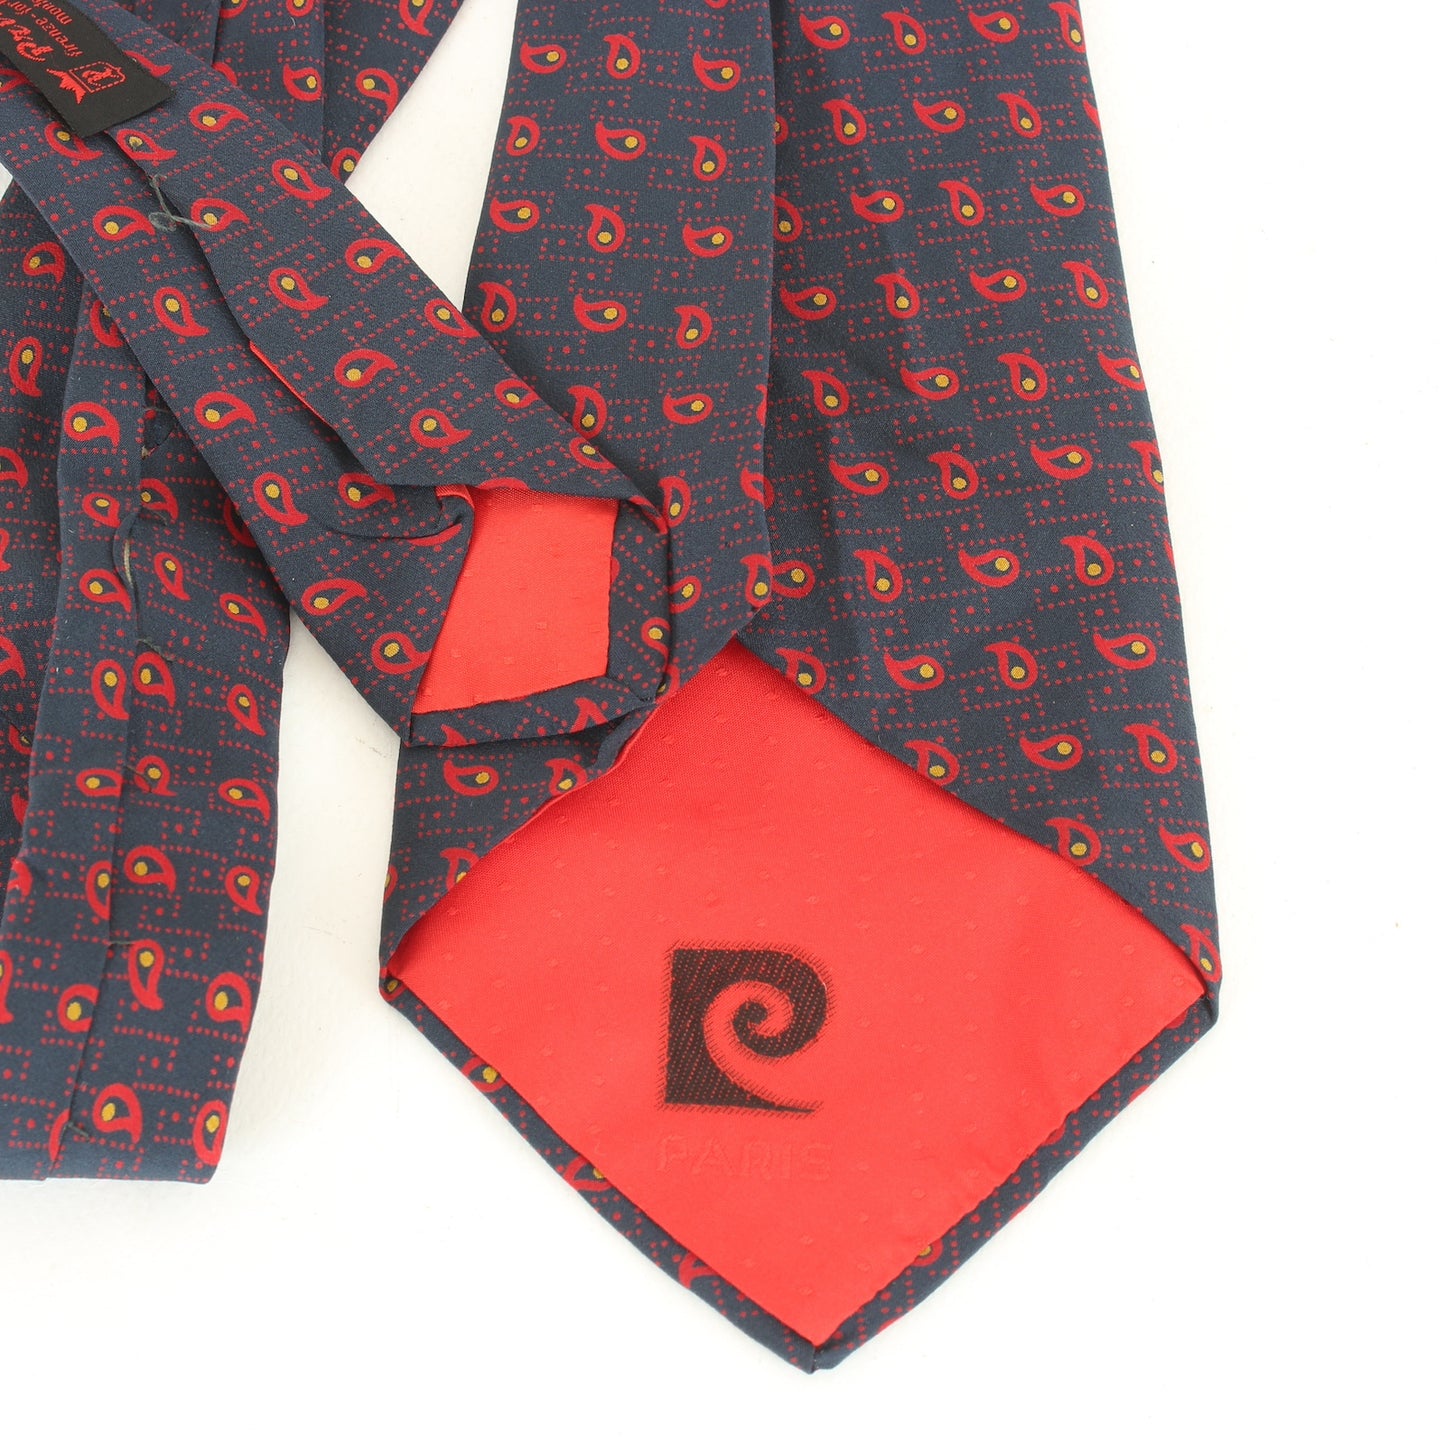 Pierre Cardin Cravatta Classica Seta Blu Rossa Vintage Anni 80